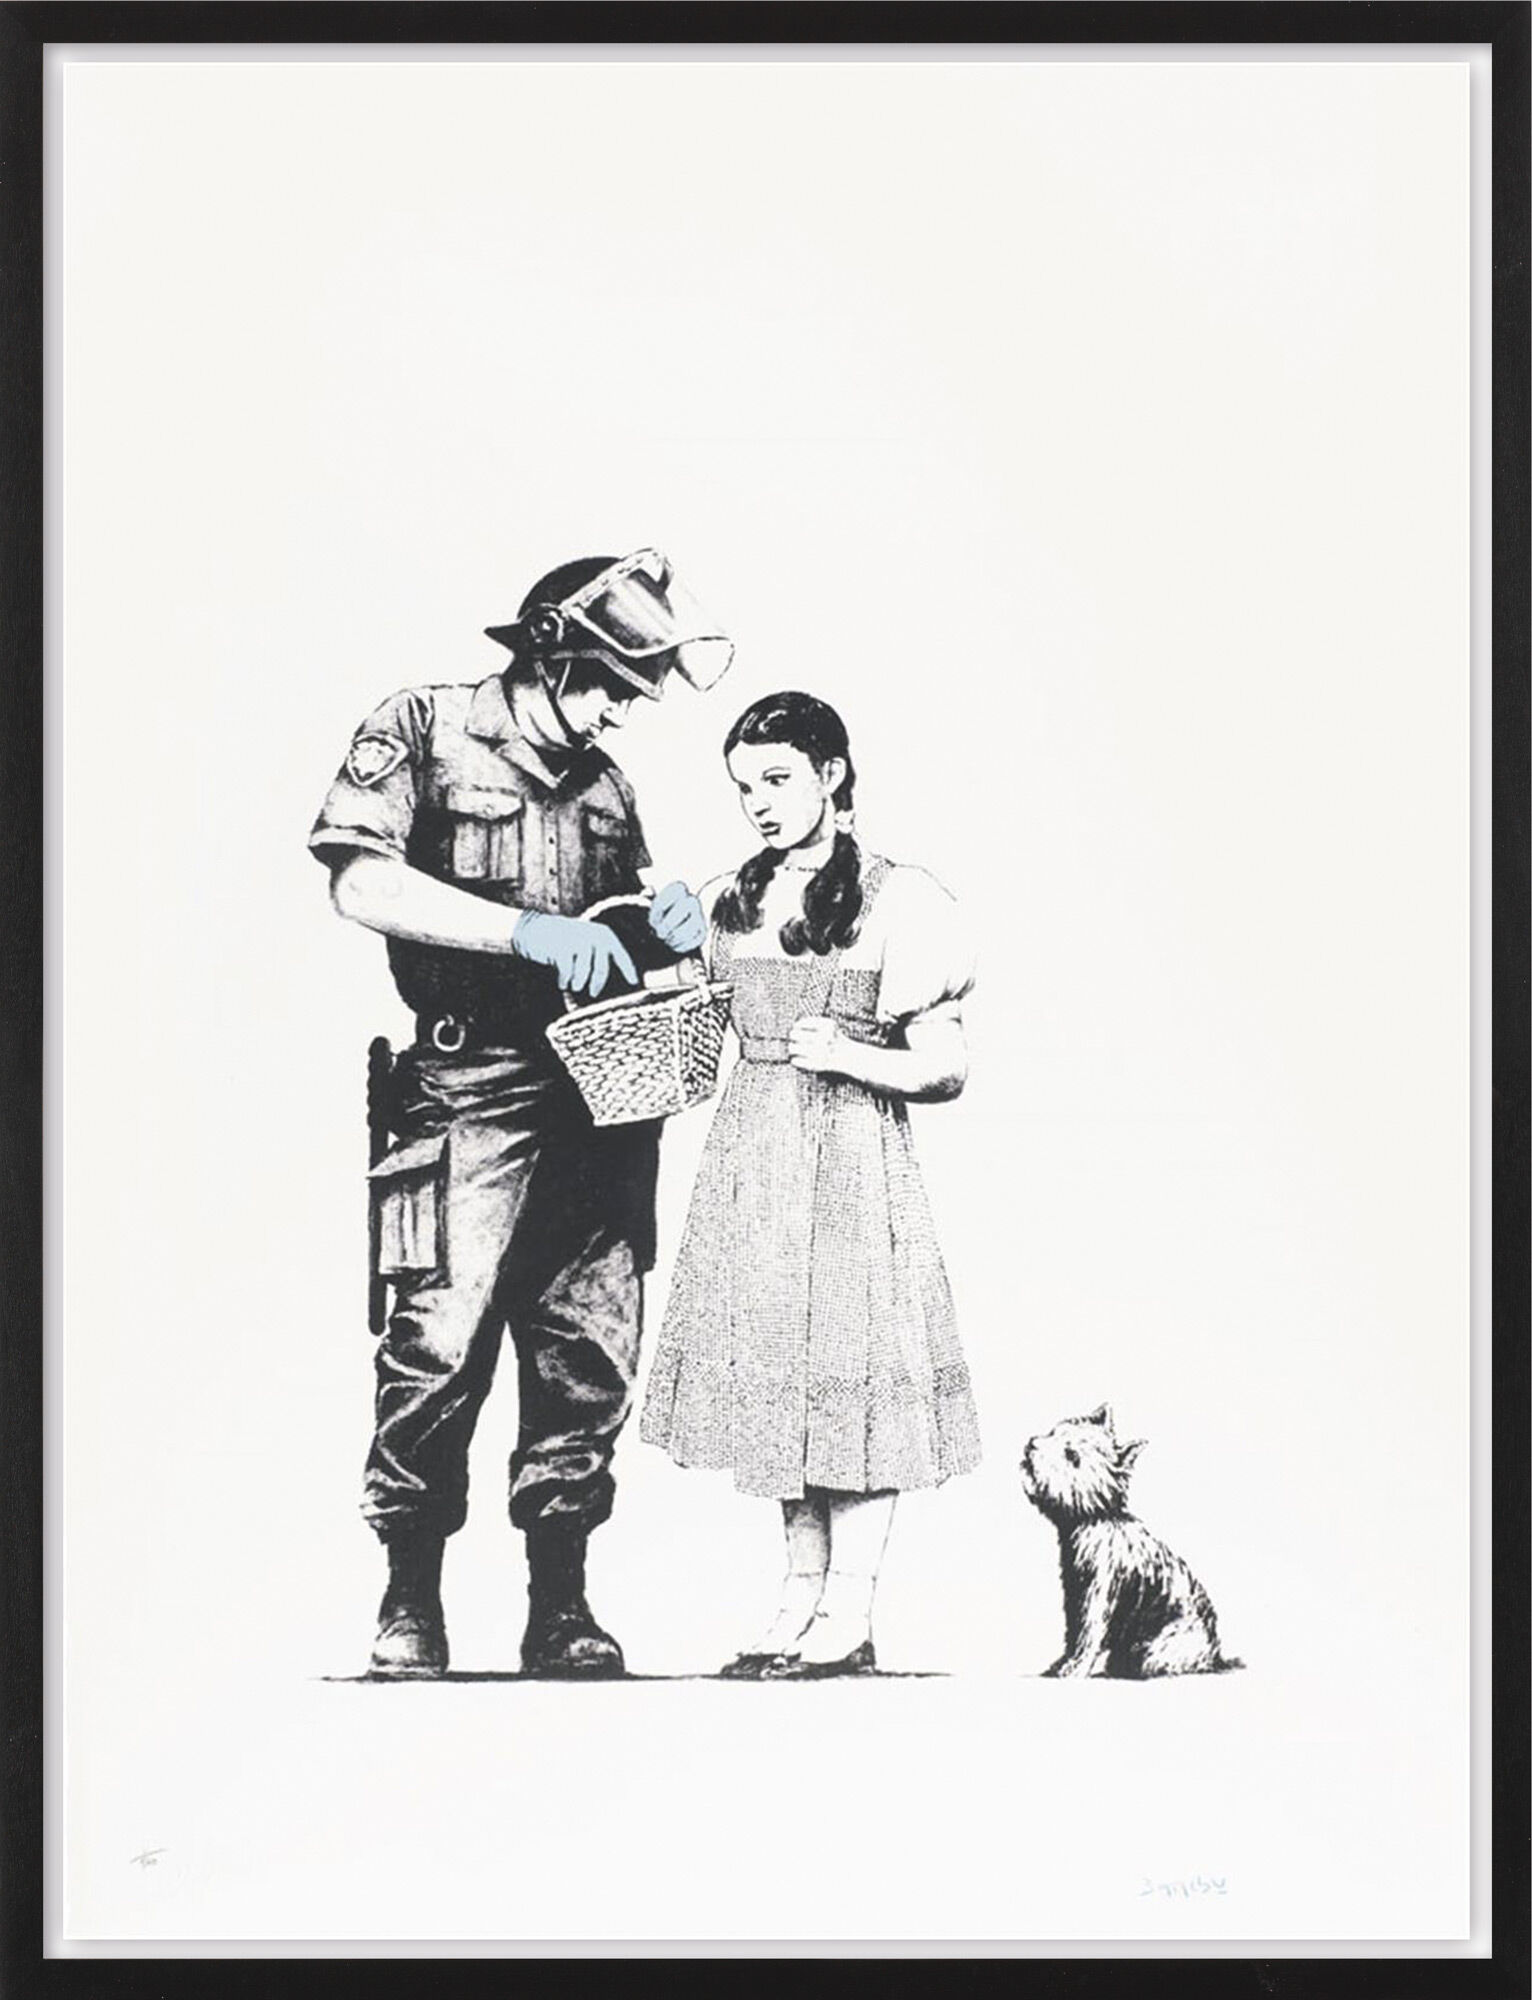 Bild "Stop and Search" (2007) von Banksy